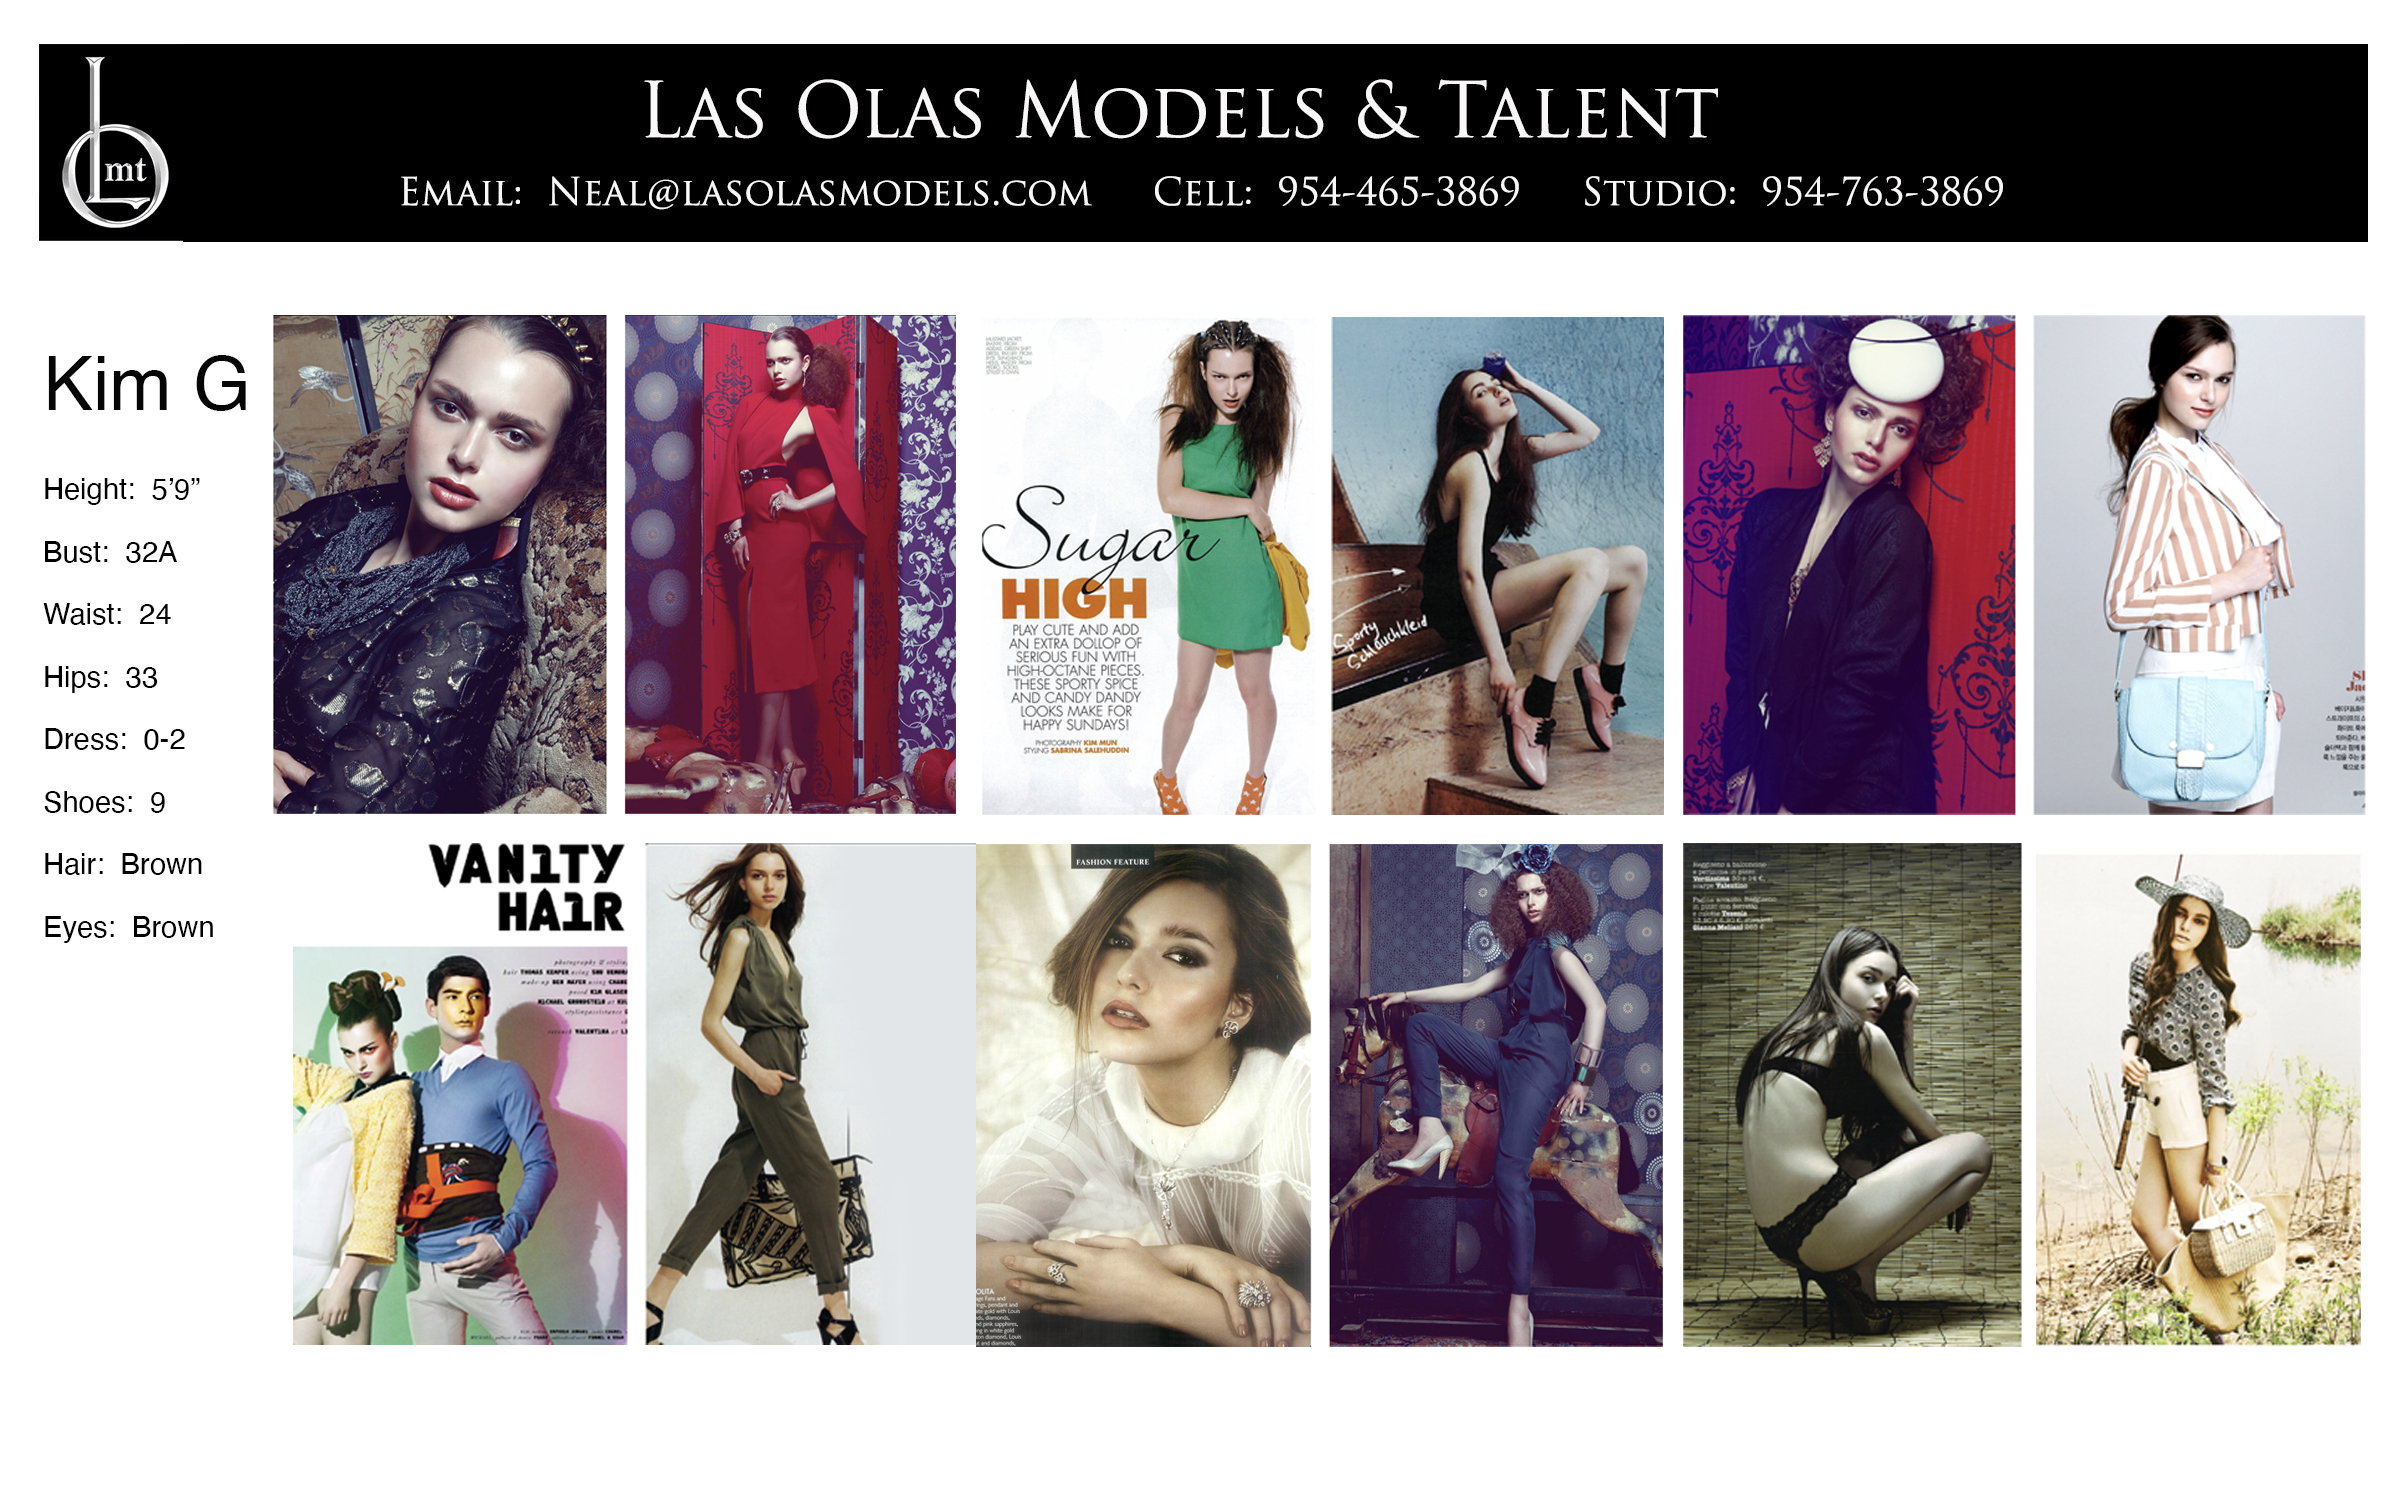 Models Fort Lauderdale Miami South Florida - Print Video Commercial Catalog - Las Olas Models & Talent - Cindy Comp